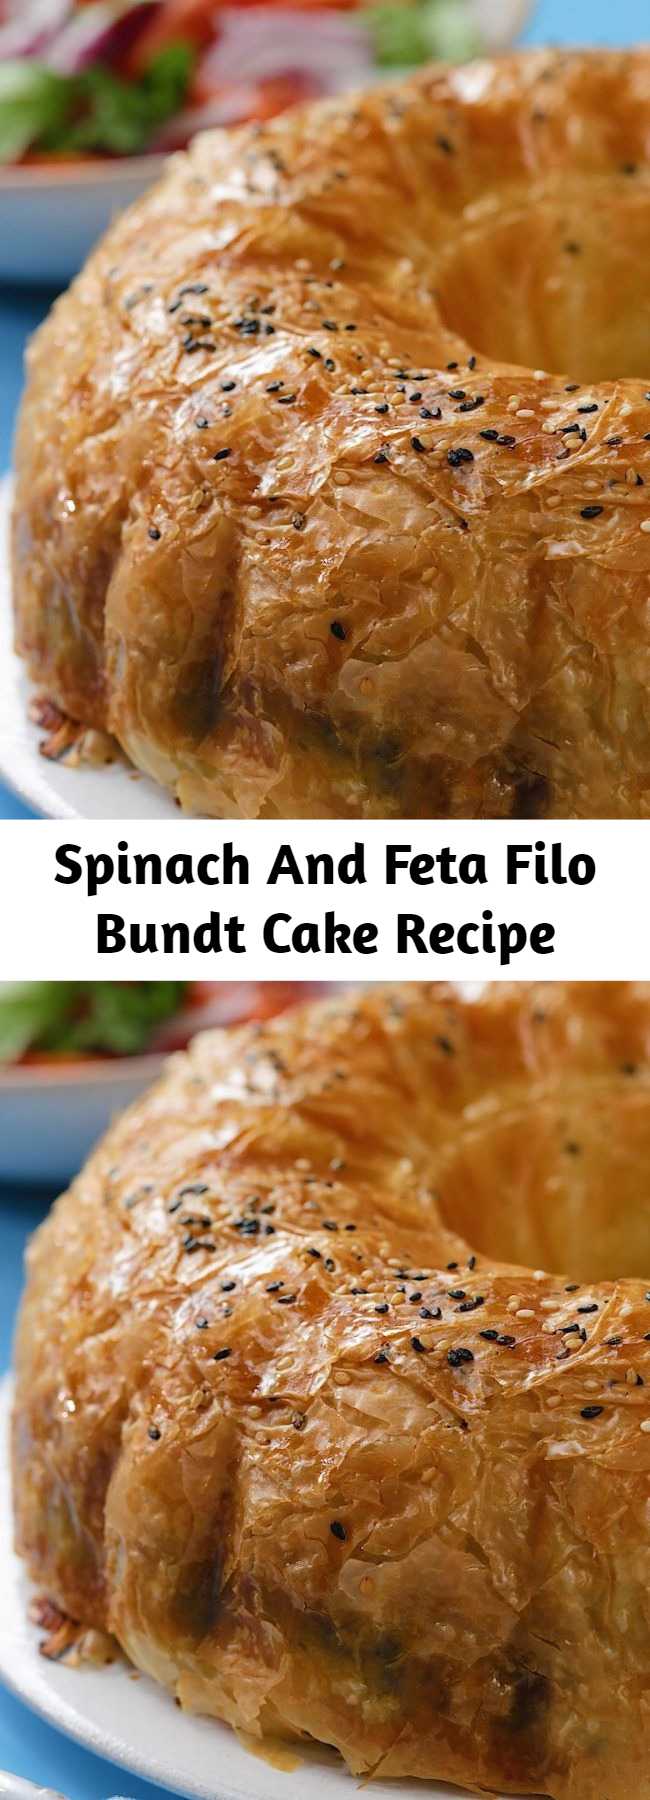 Spinach And Feta Filo Bundt Cake Recipe - This spinach and feta bundt cake is the perfect sharing dish!